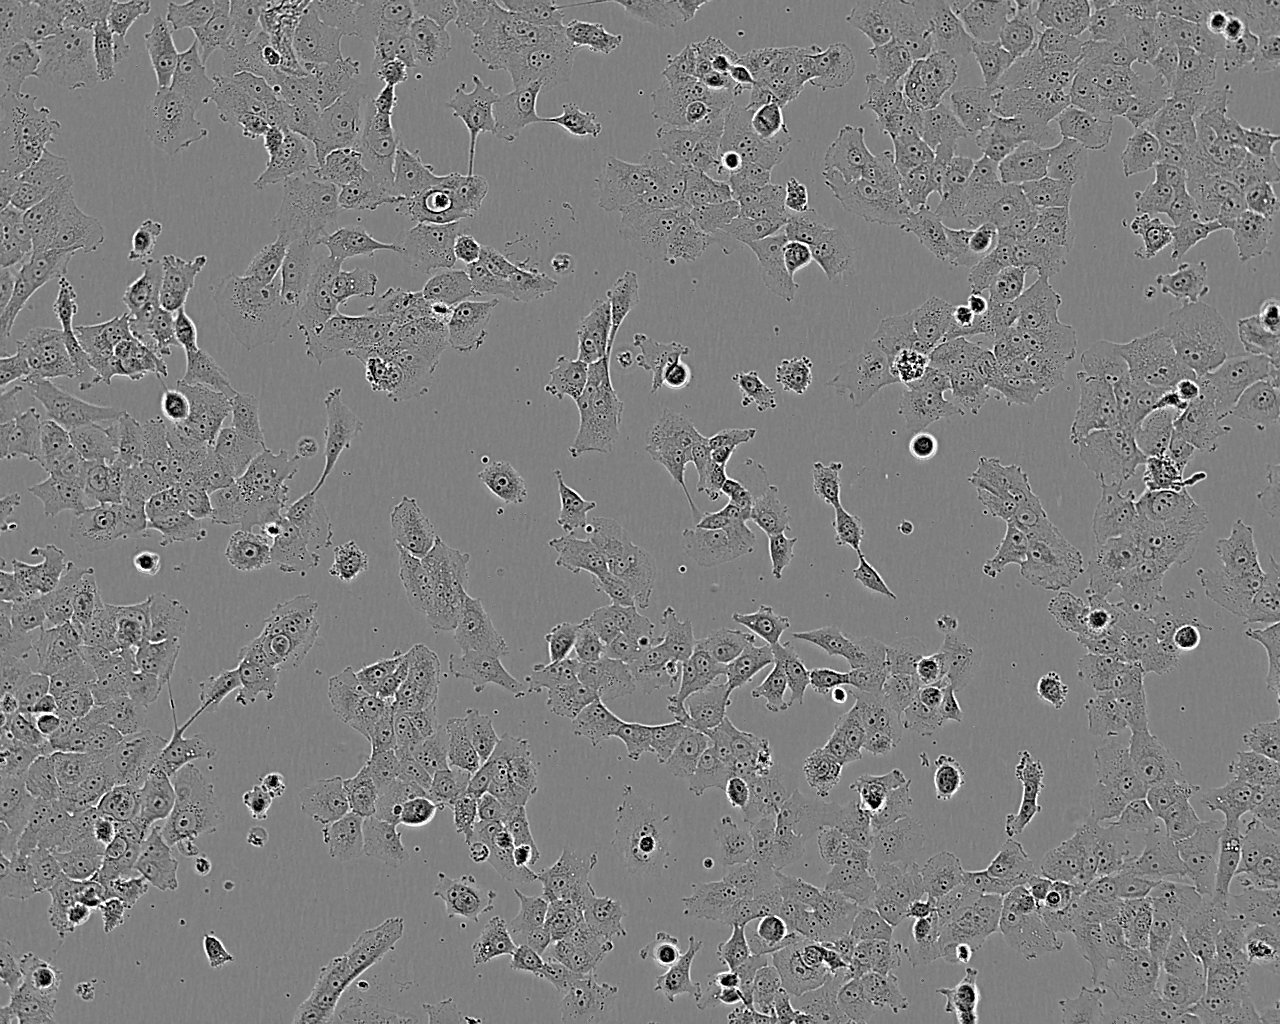 HBZY-1 Cell:大鼠肾小球系膜细胞系